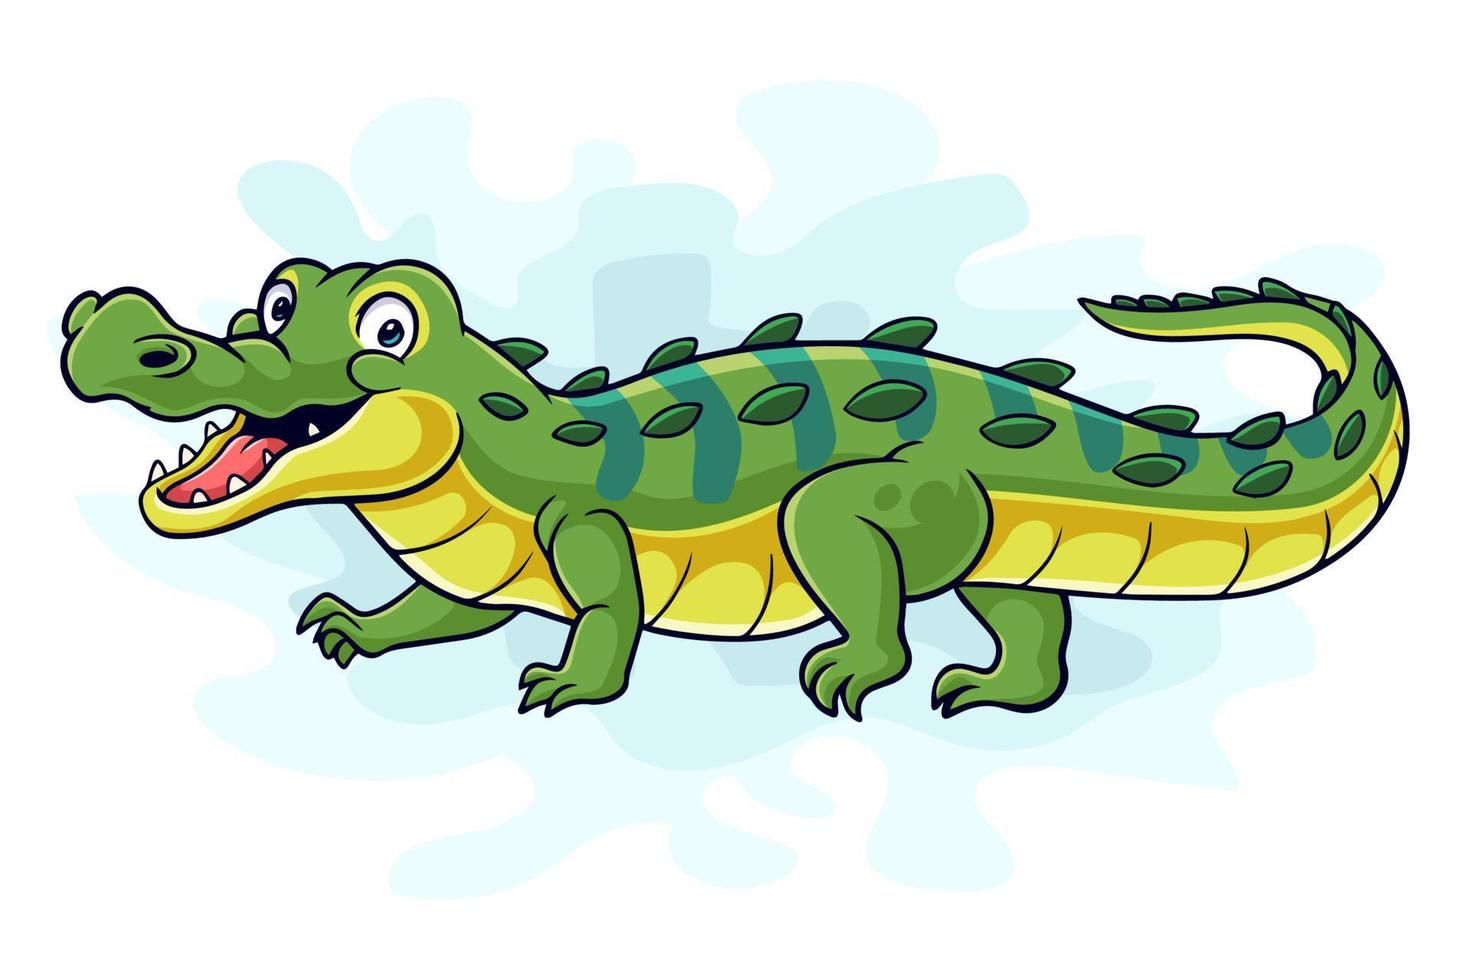 Cartoon funny crocodile isolated on white background vector